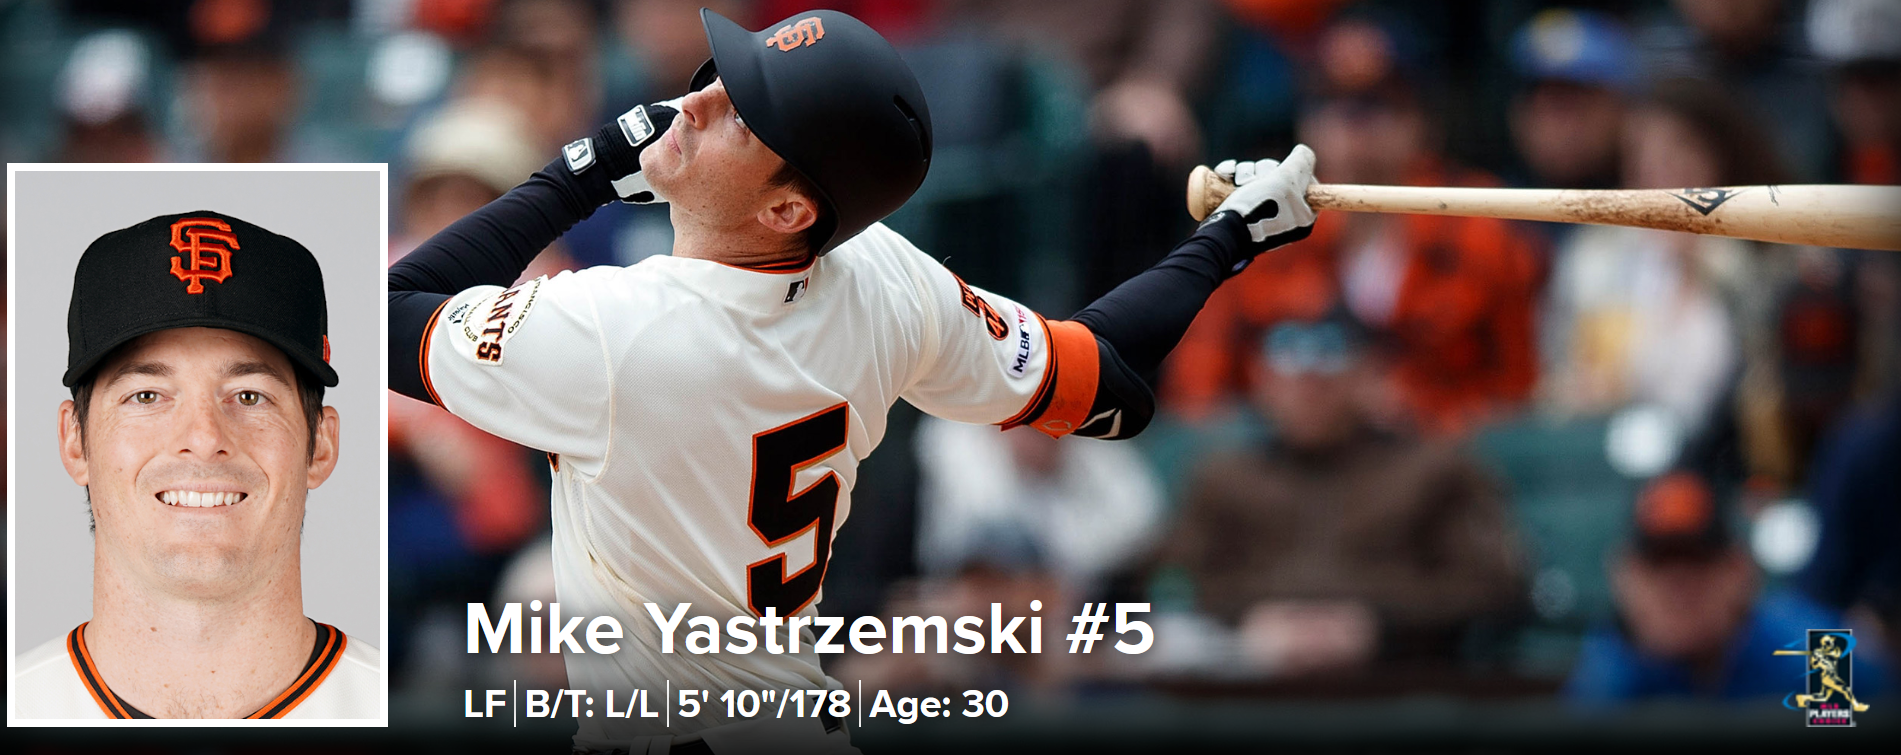 Mike Yastrzemski (#5) All 25 Home Runs of the 2021 MLB Season